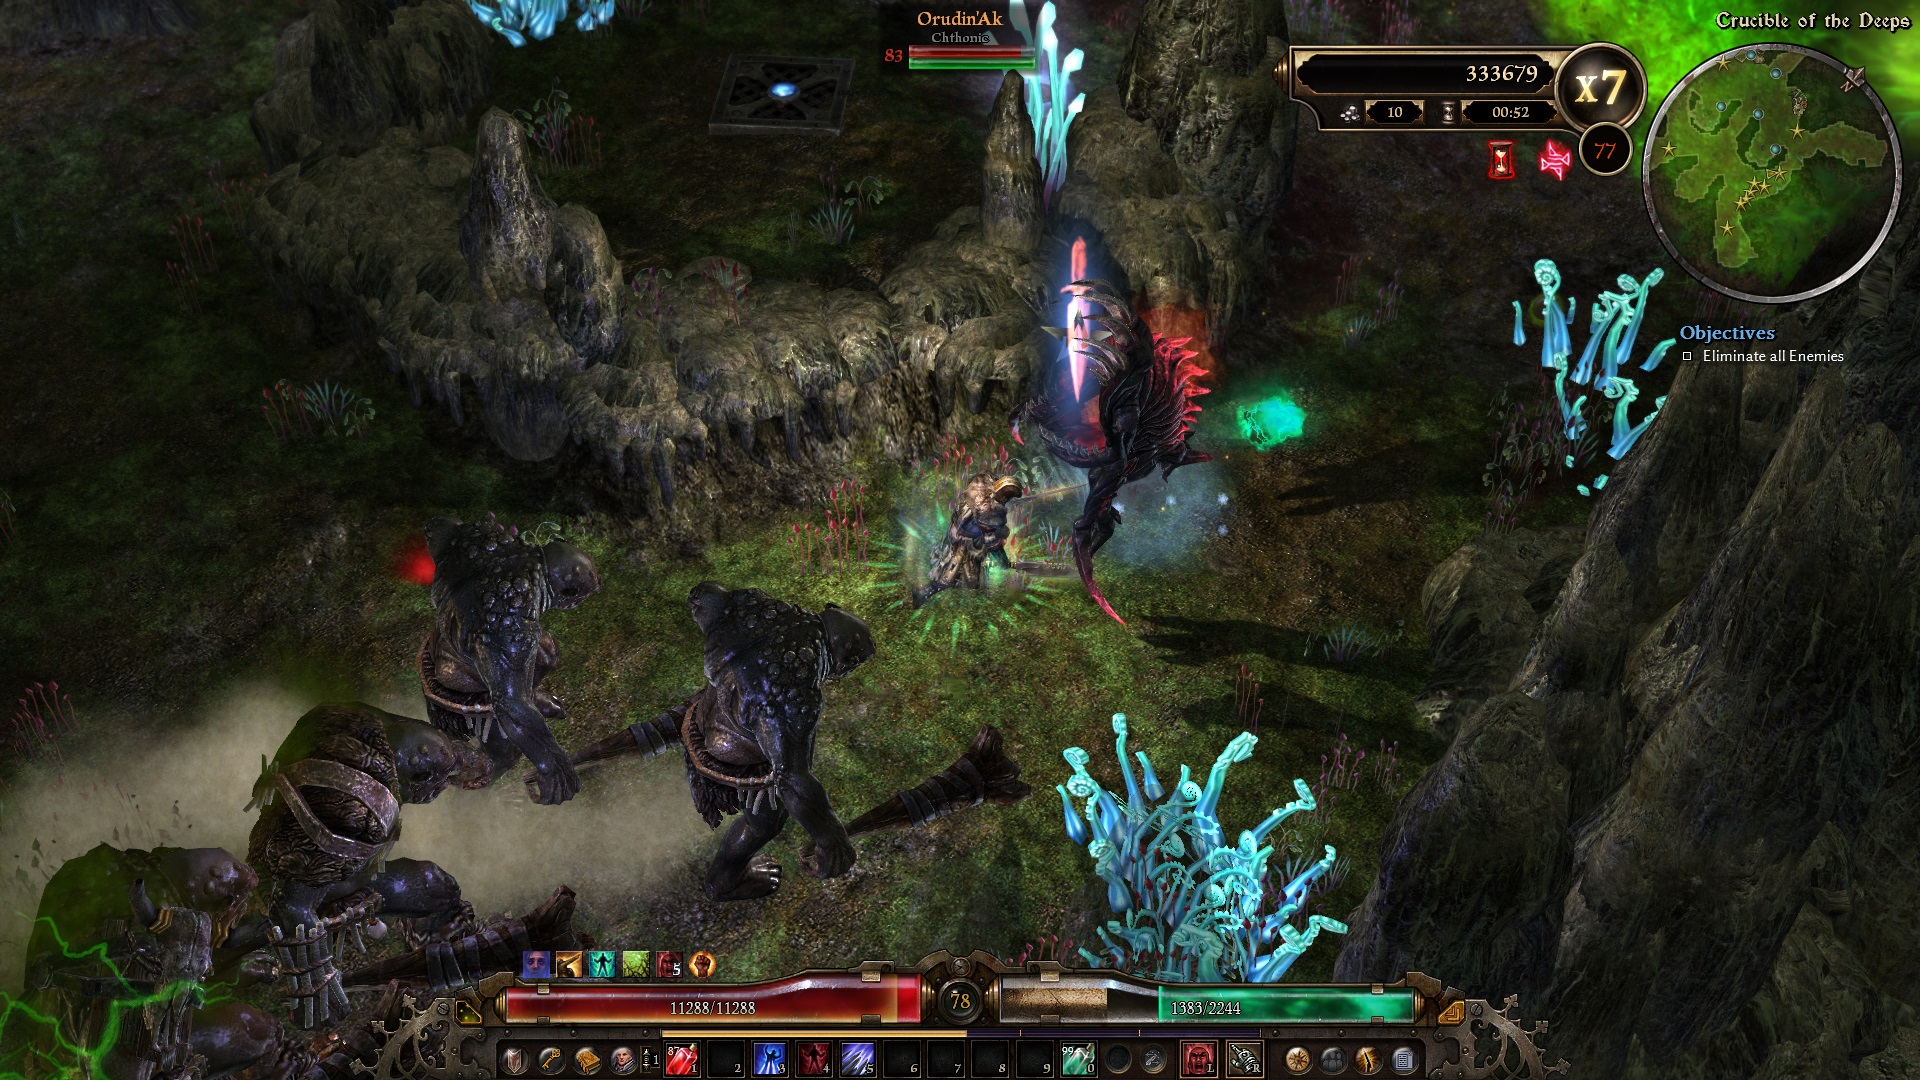 Grim Dawn - Crucible Mode DLC screenshot